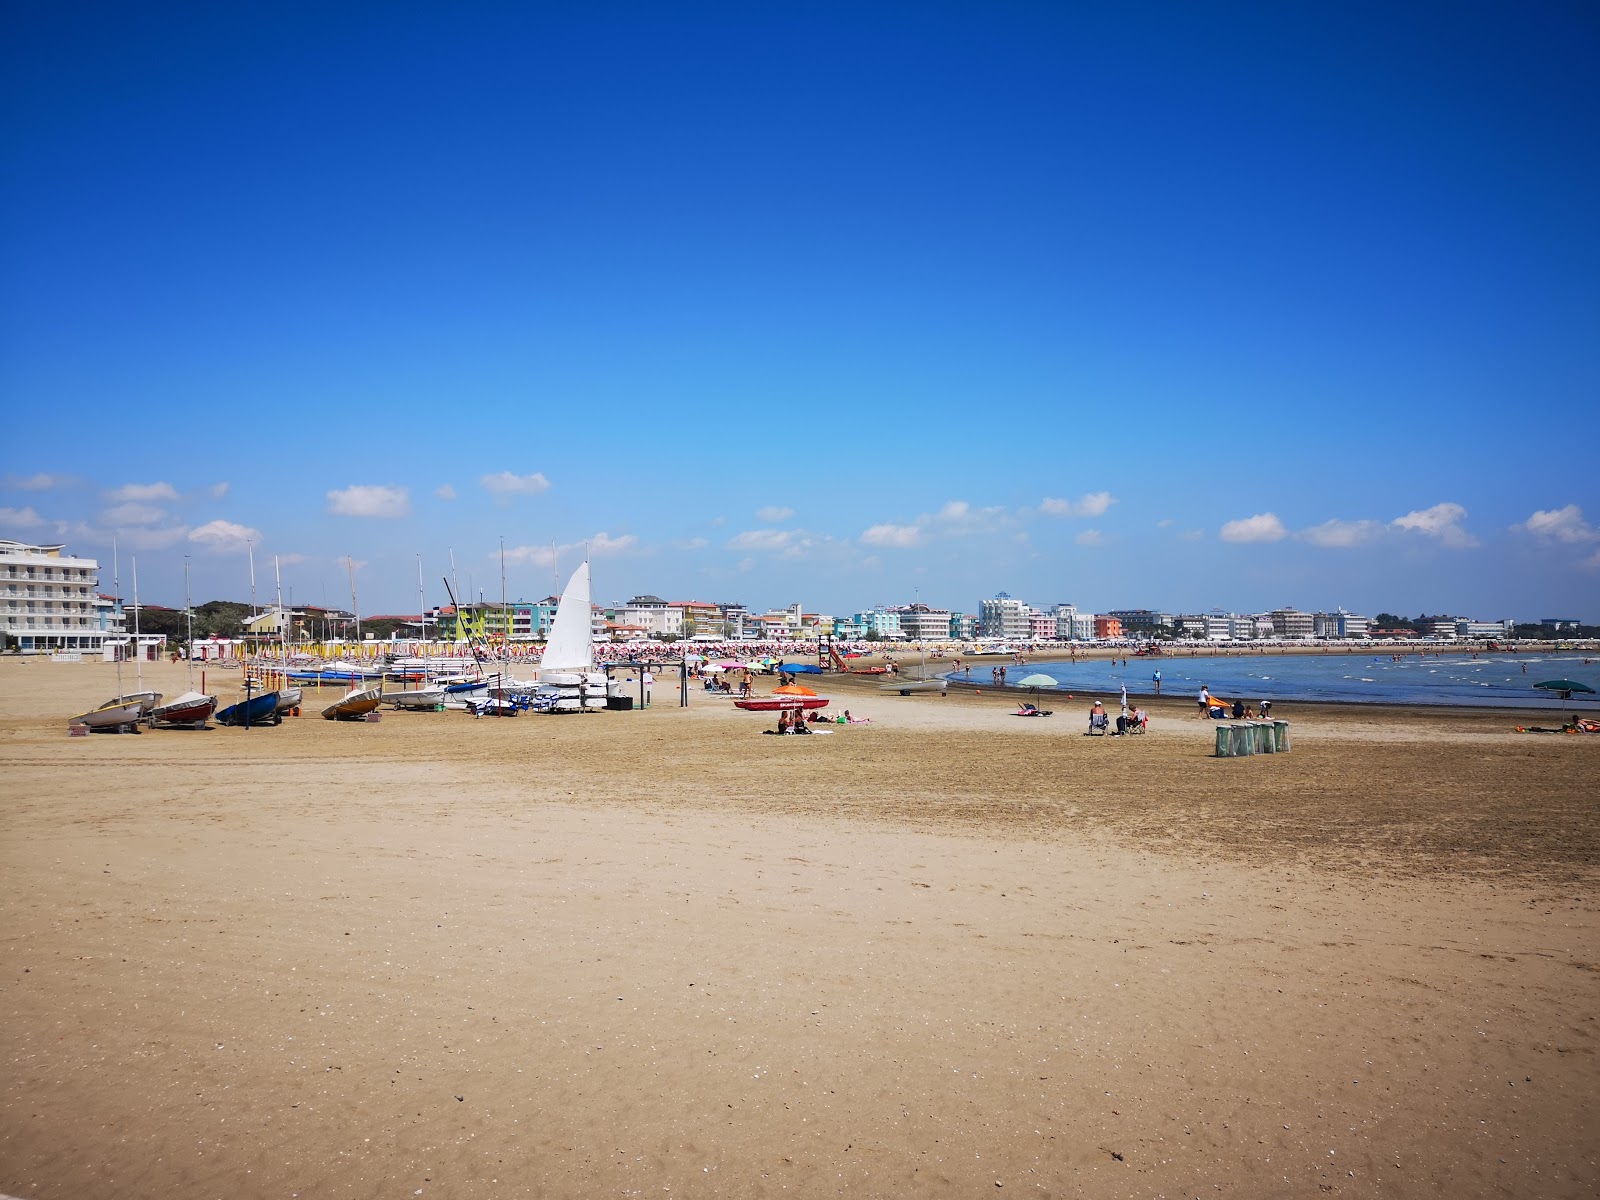 Spiaggia di Levante的照片 带有碧绿色纯水表面